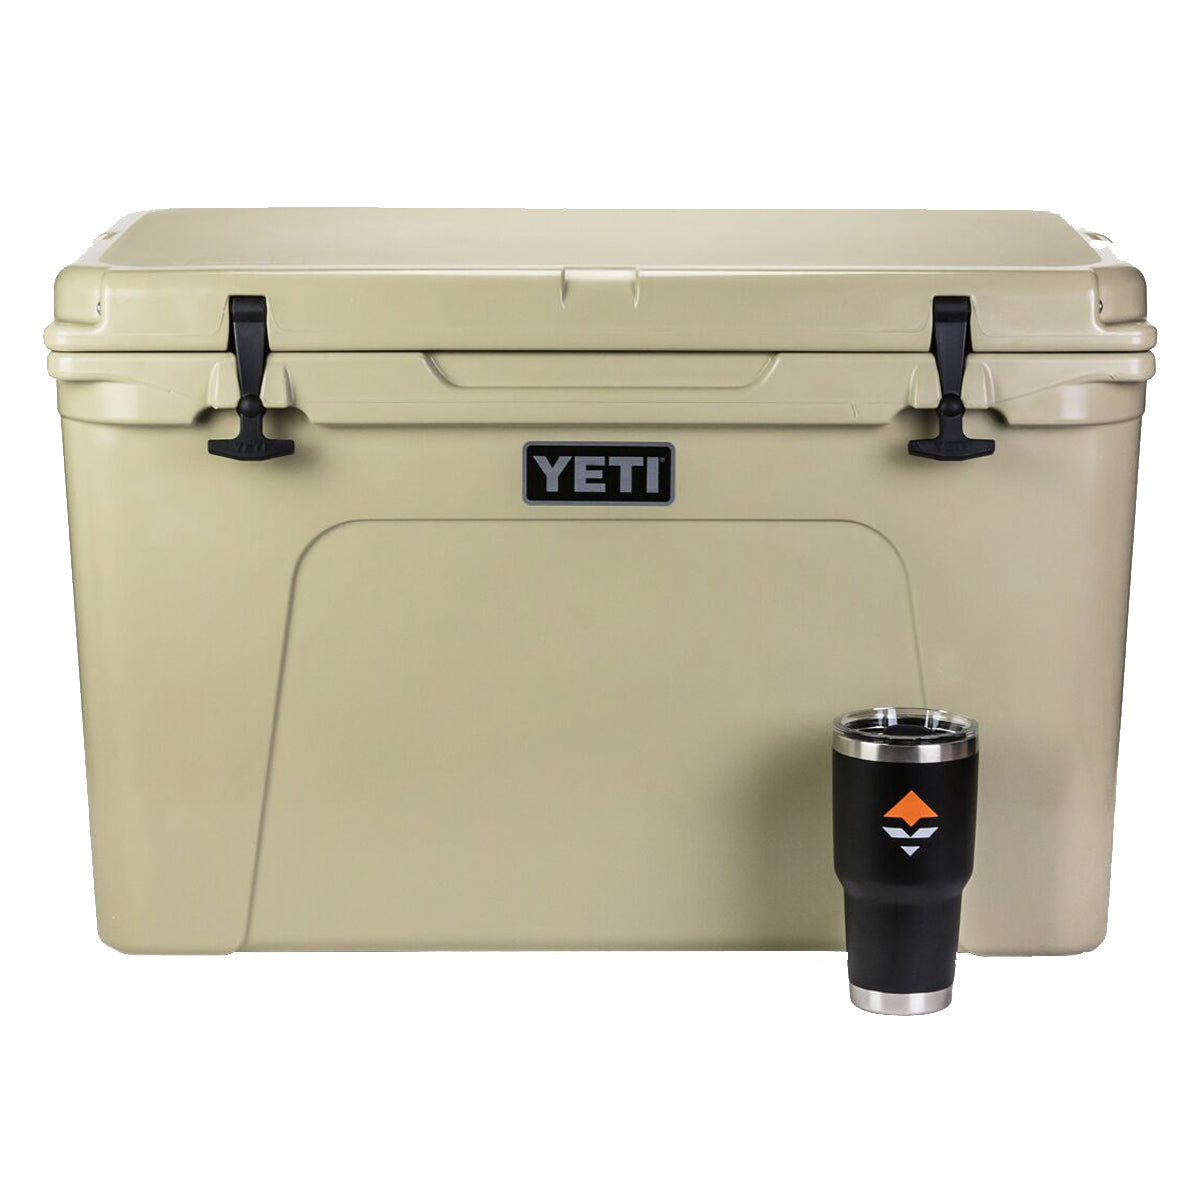 YETI Tundra 105 Cooler & Free goHUNT Rambler by YETI | Camping - goHUNT Shop